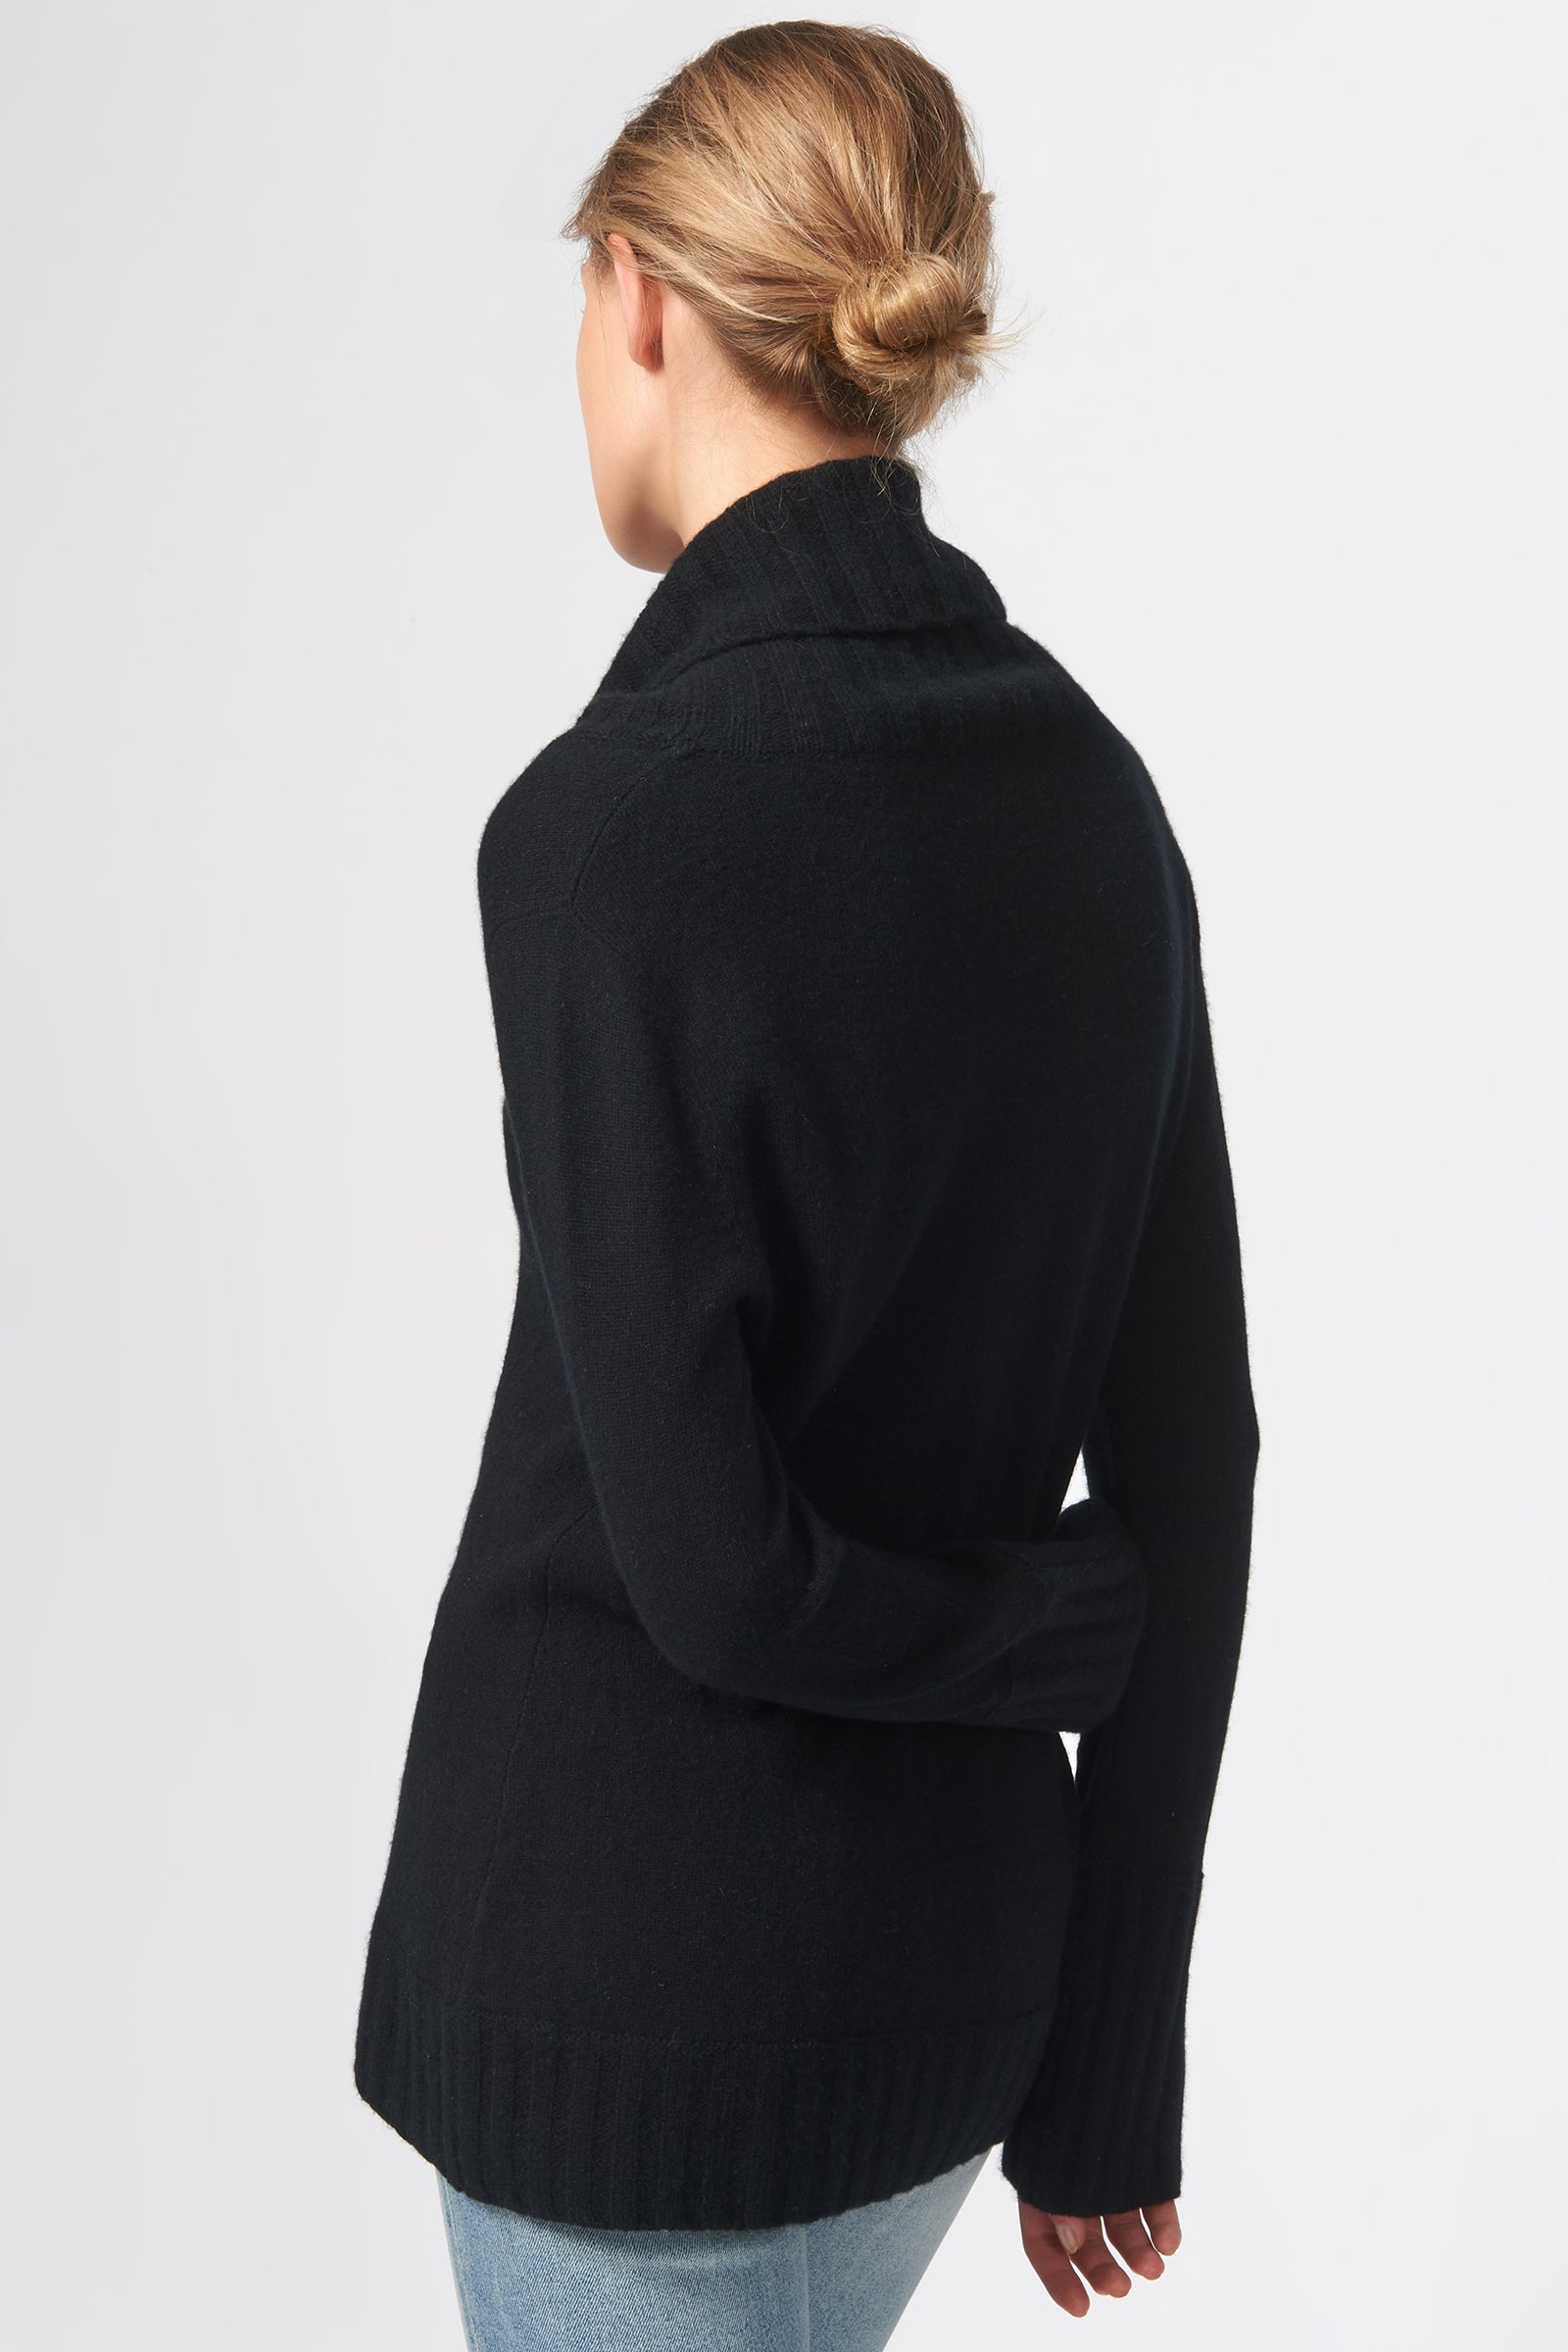 Kal Rieman Cashmere Cowel T-Neck in Black on Model Back View